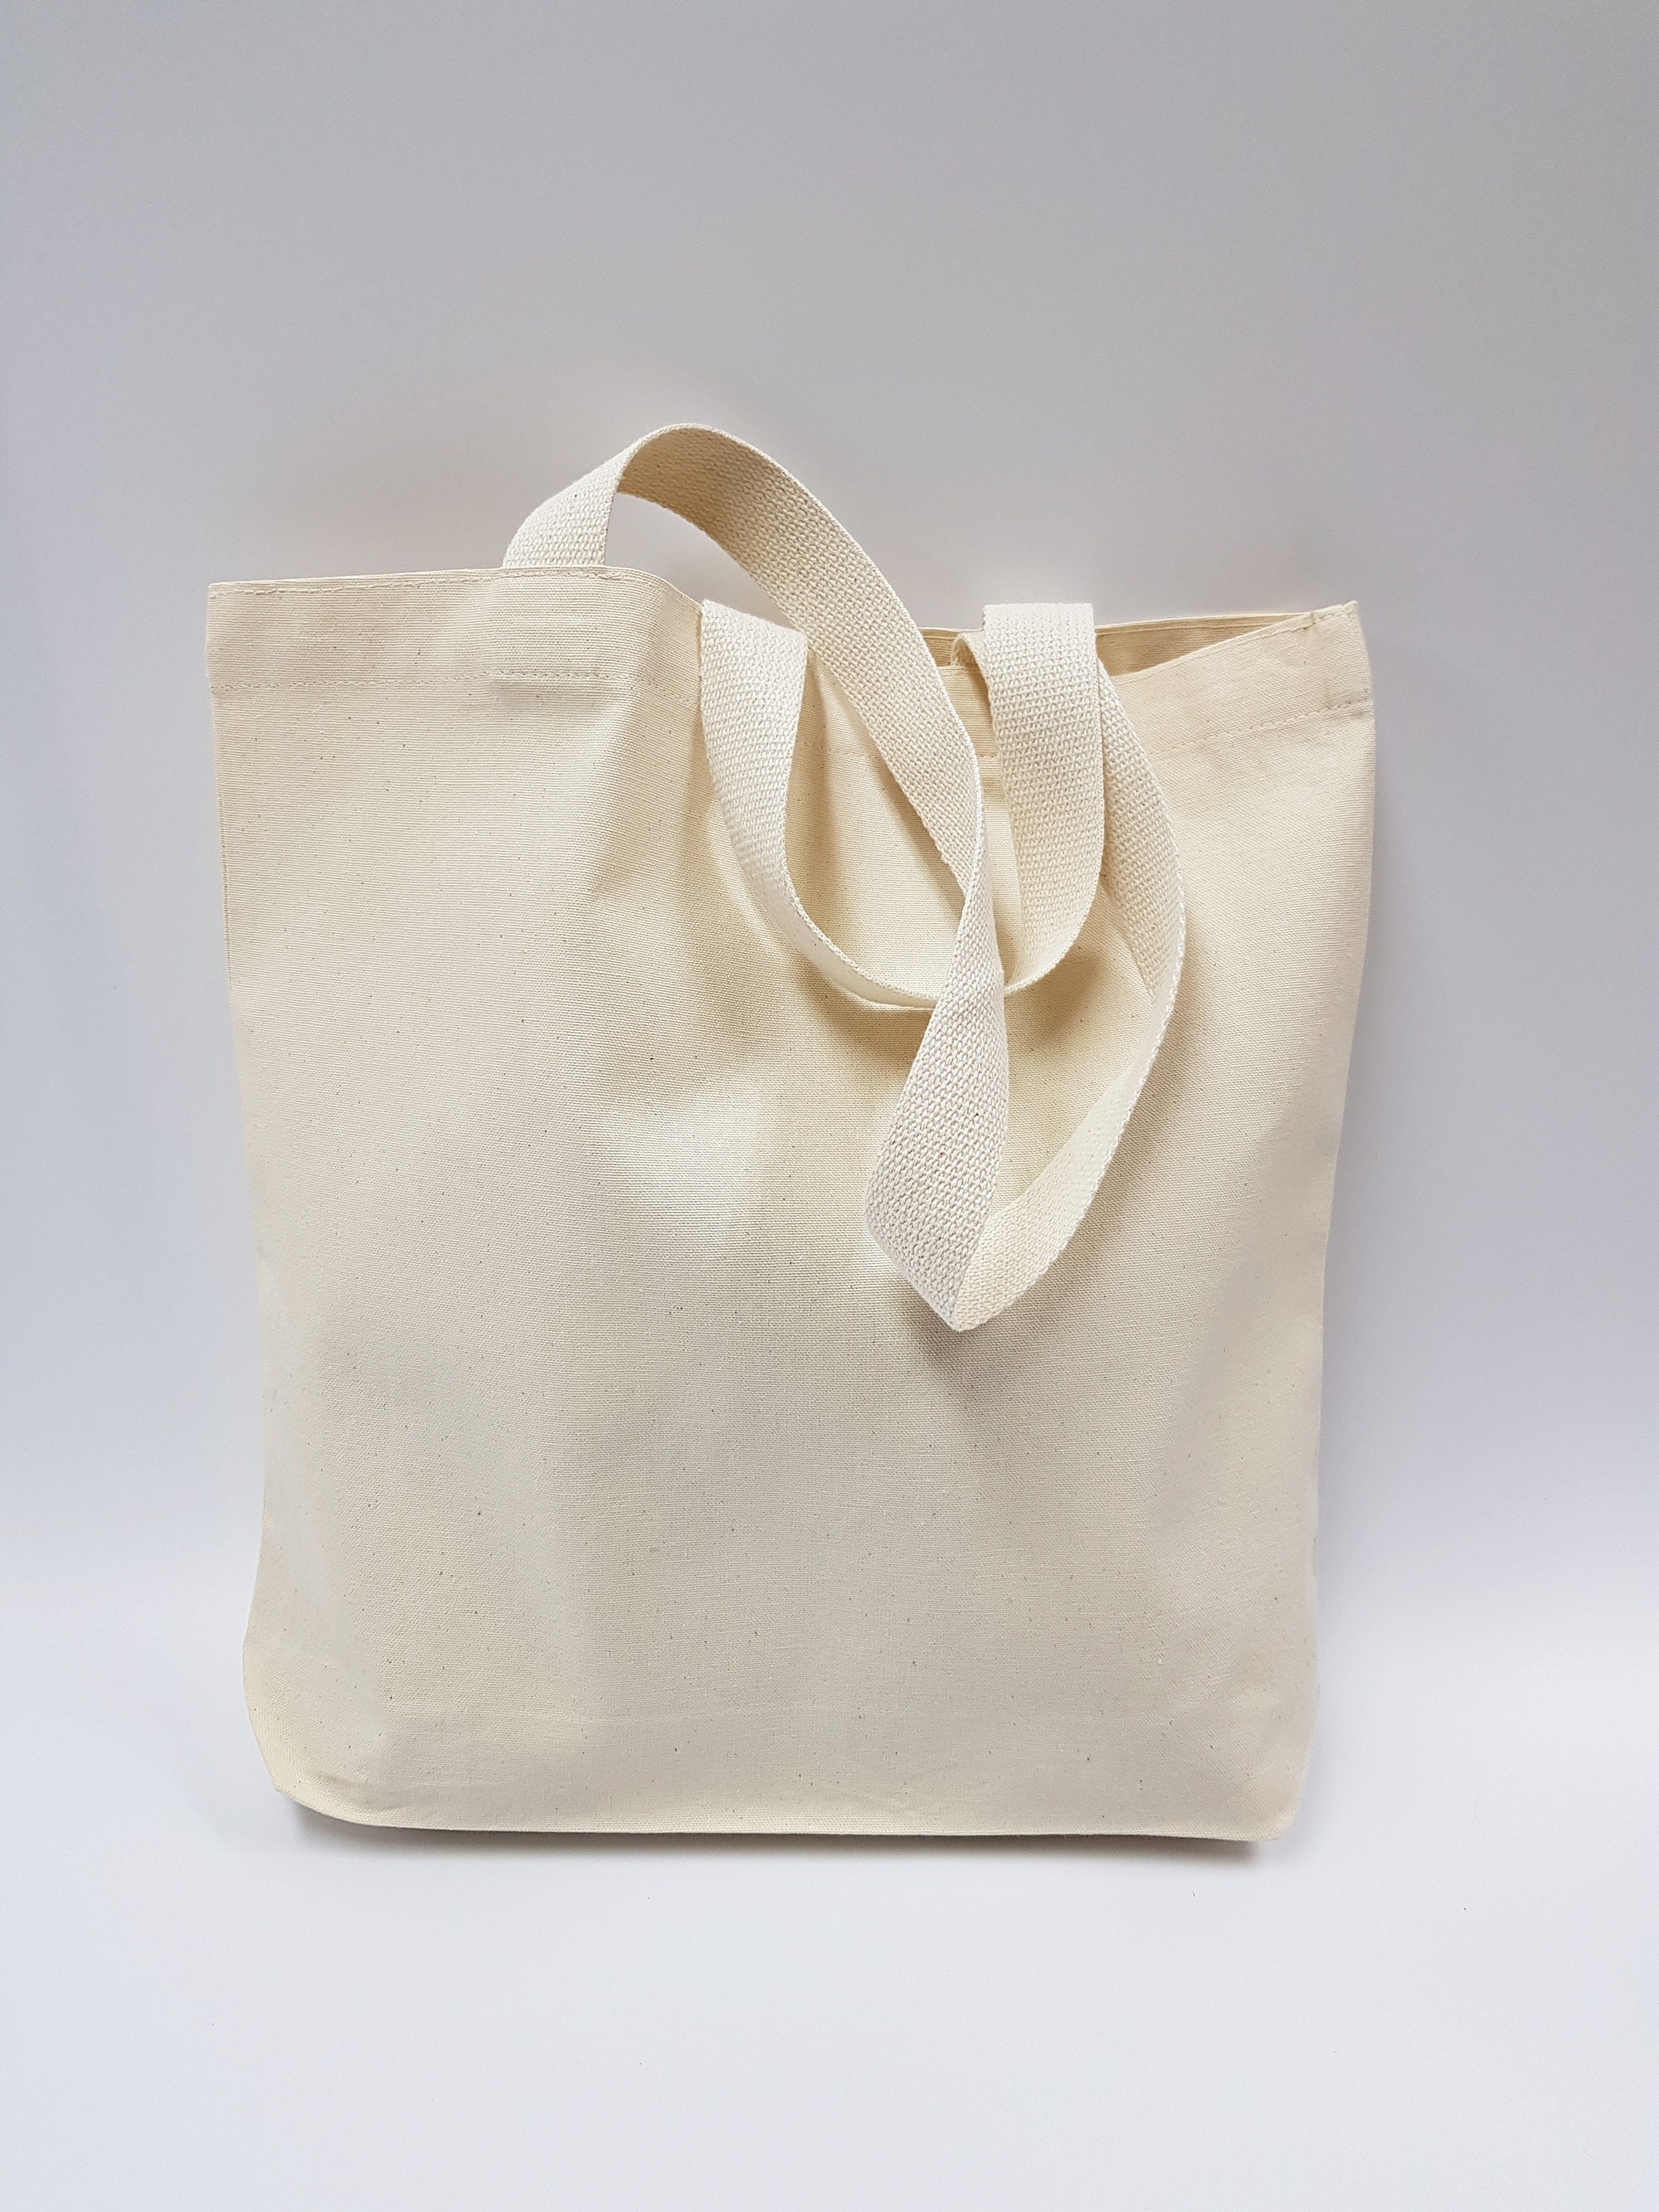 1414 Plain Unbleached Cotton Oxford Tote Bag, Mareket Bag, Eco Friendly  Cotton Fabric Style102 